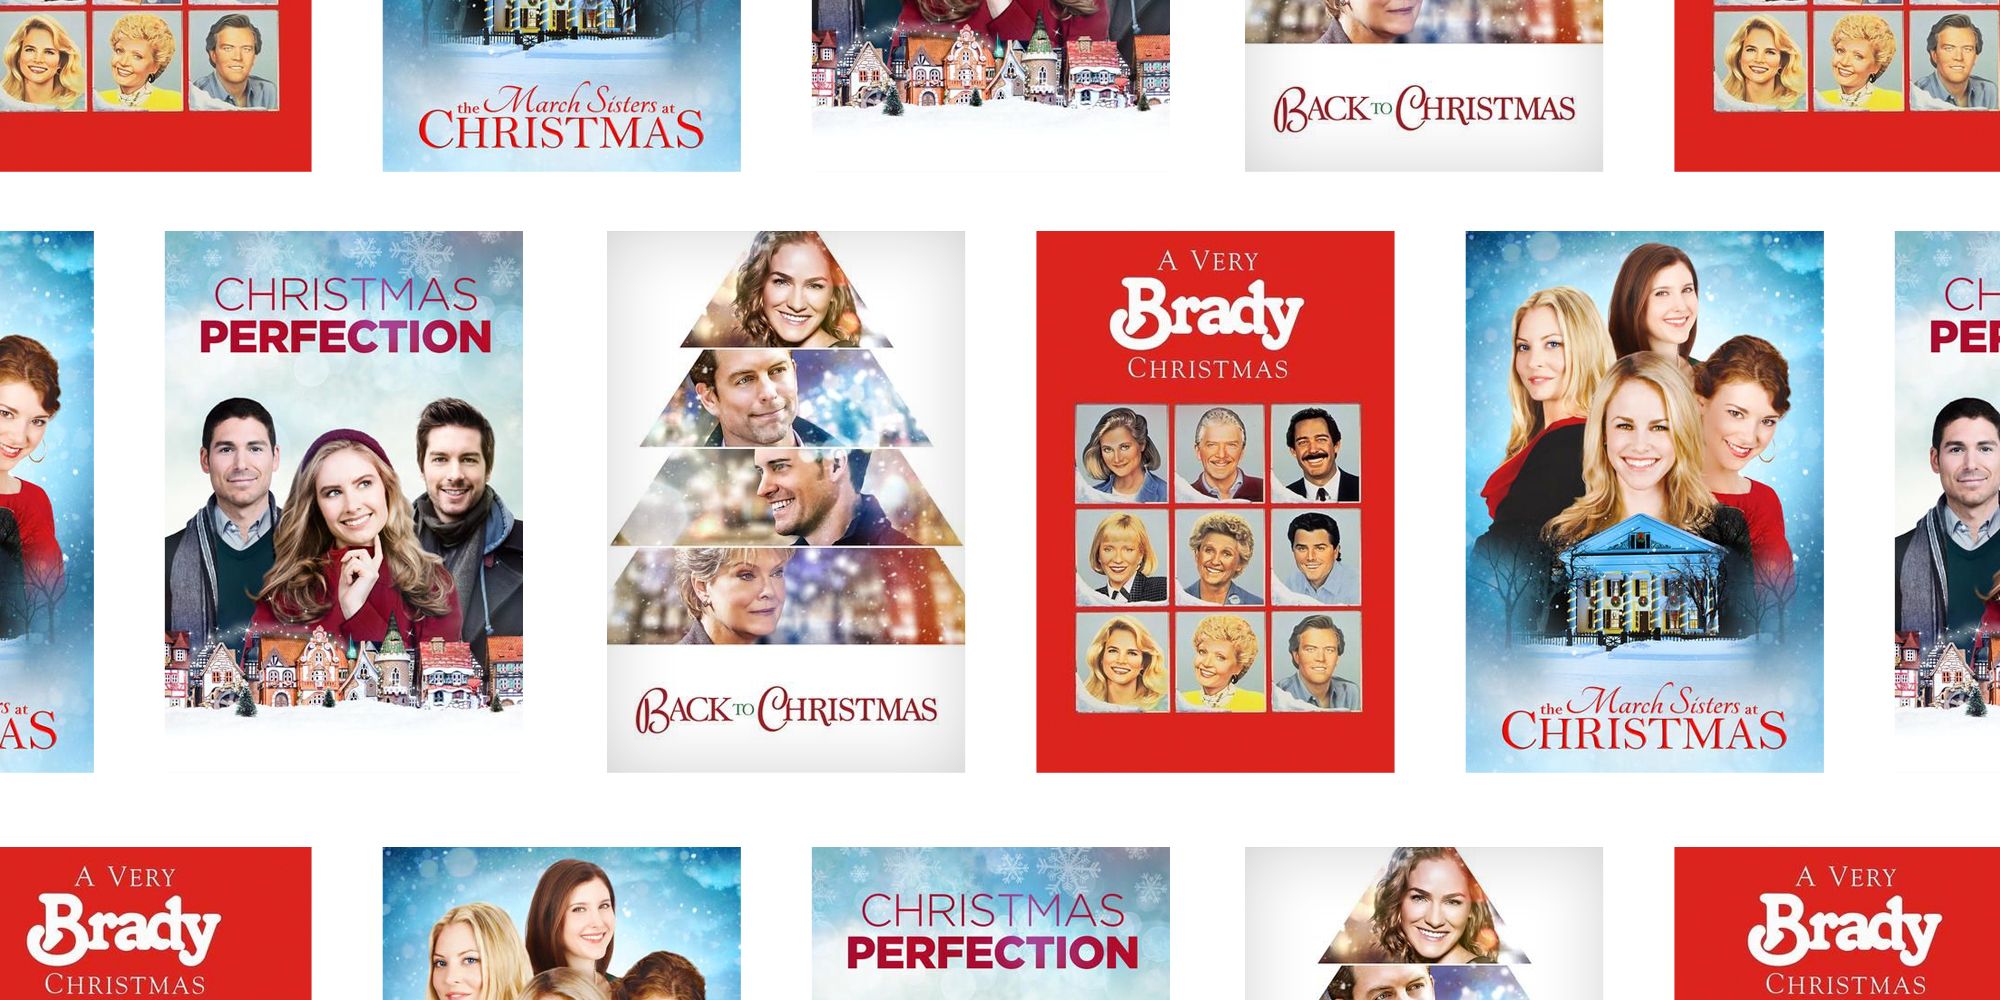 11 Best Christmas Movies On Hulu - Stream Holiday Films On Hulu 2021